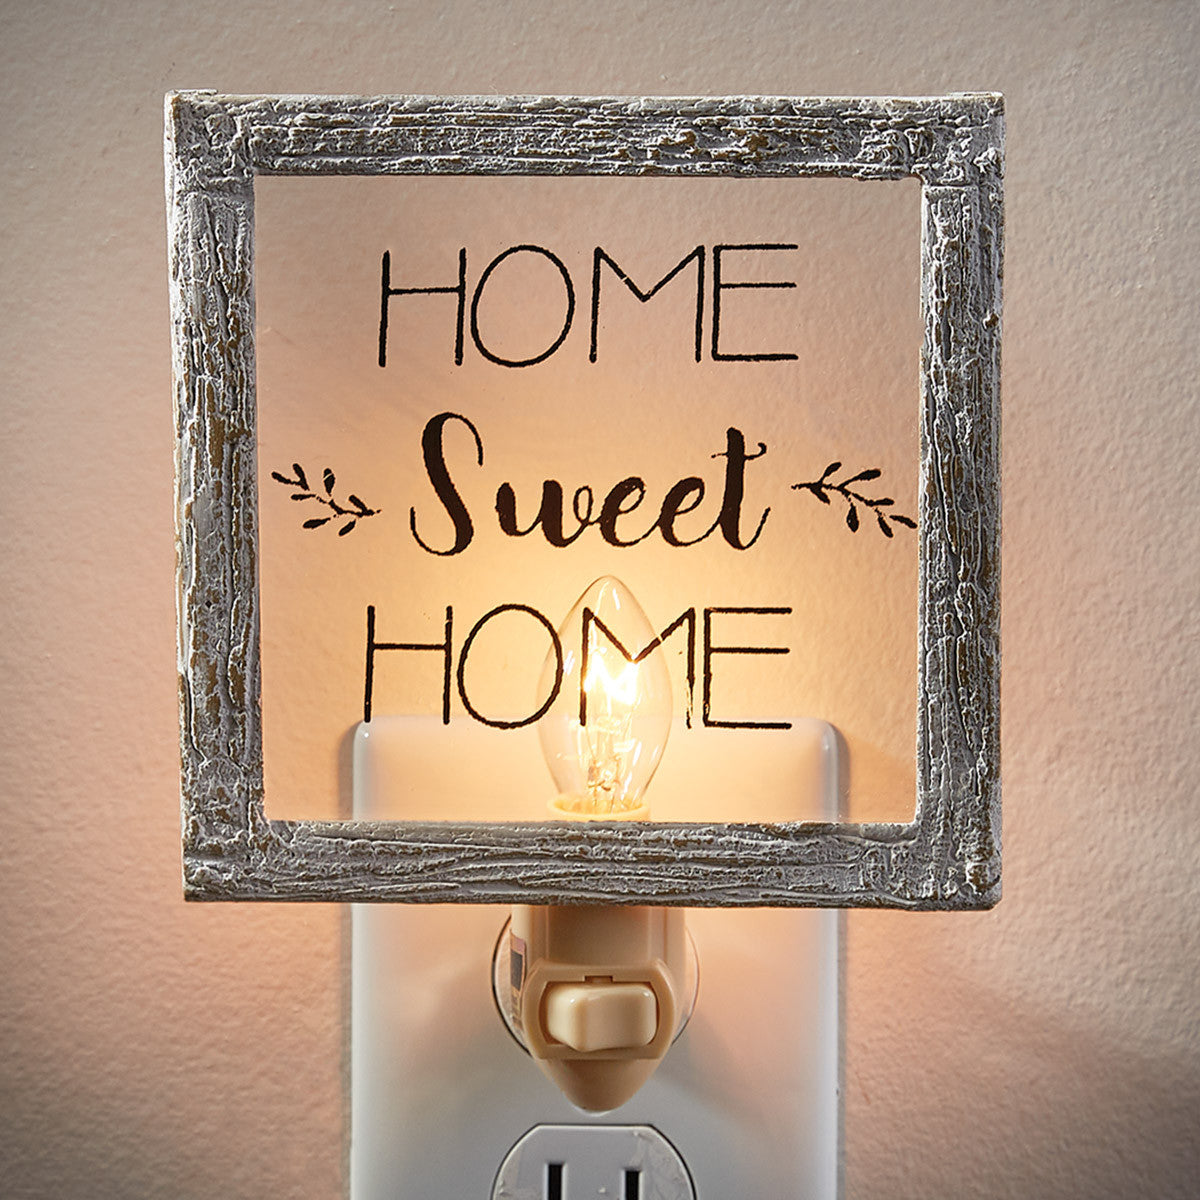 Home Sweet Home Night Light - Park Designs